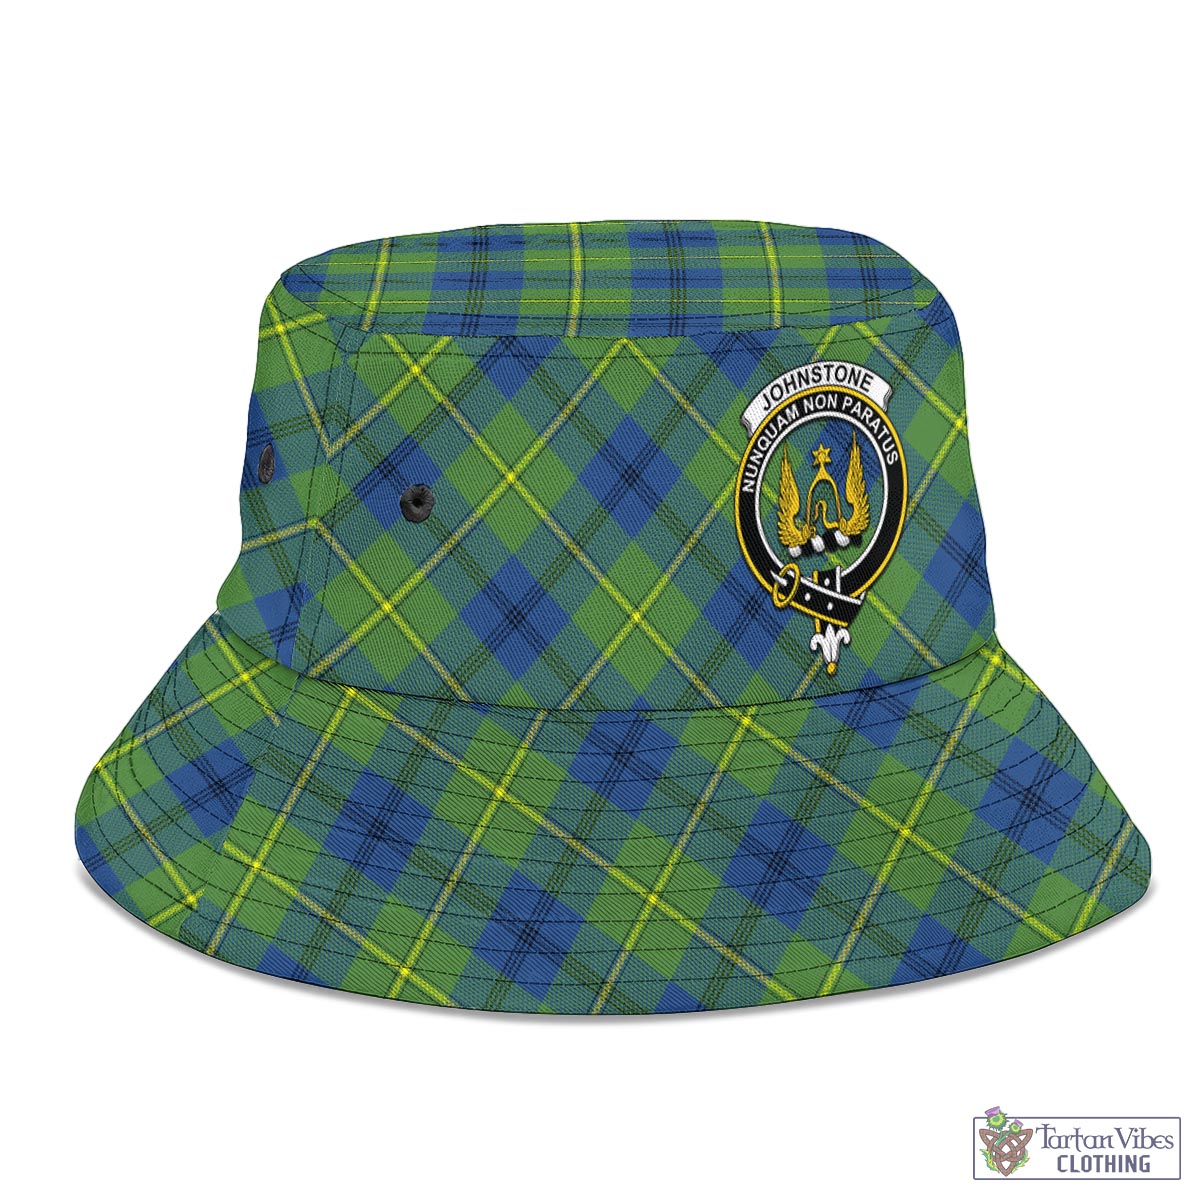 Tartan Vibes Clothing Johnstone-Johnston Ancient Tartan Bucket Hat with Family Crest